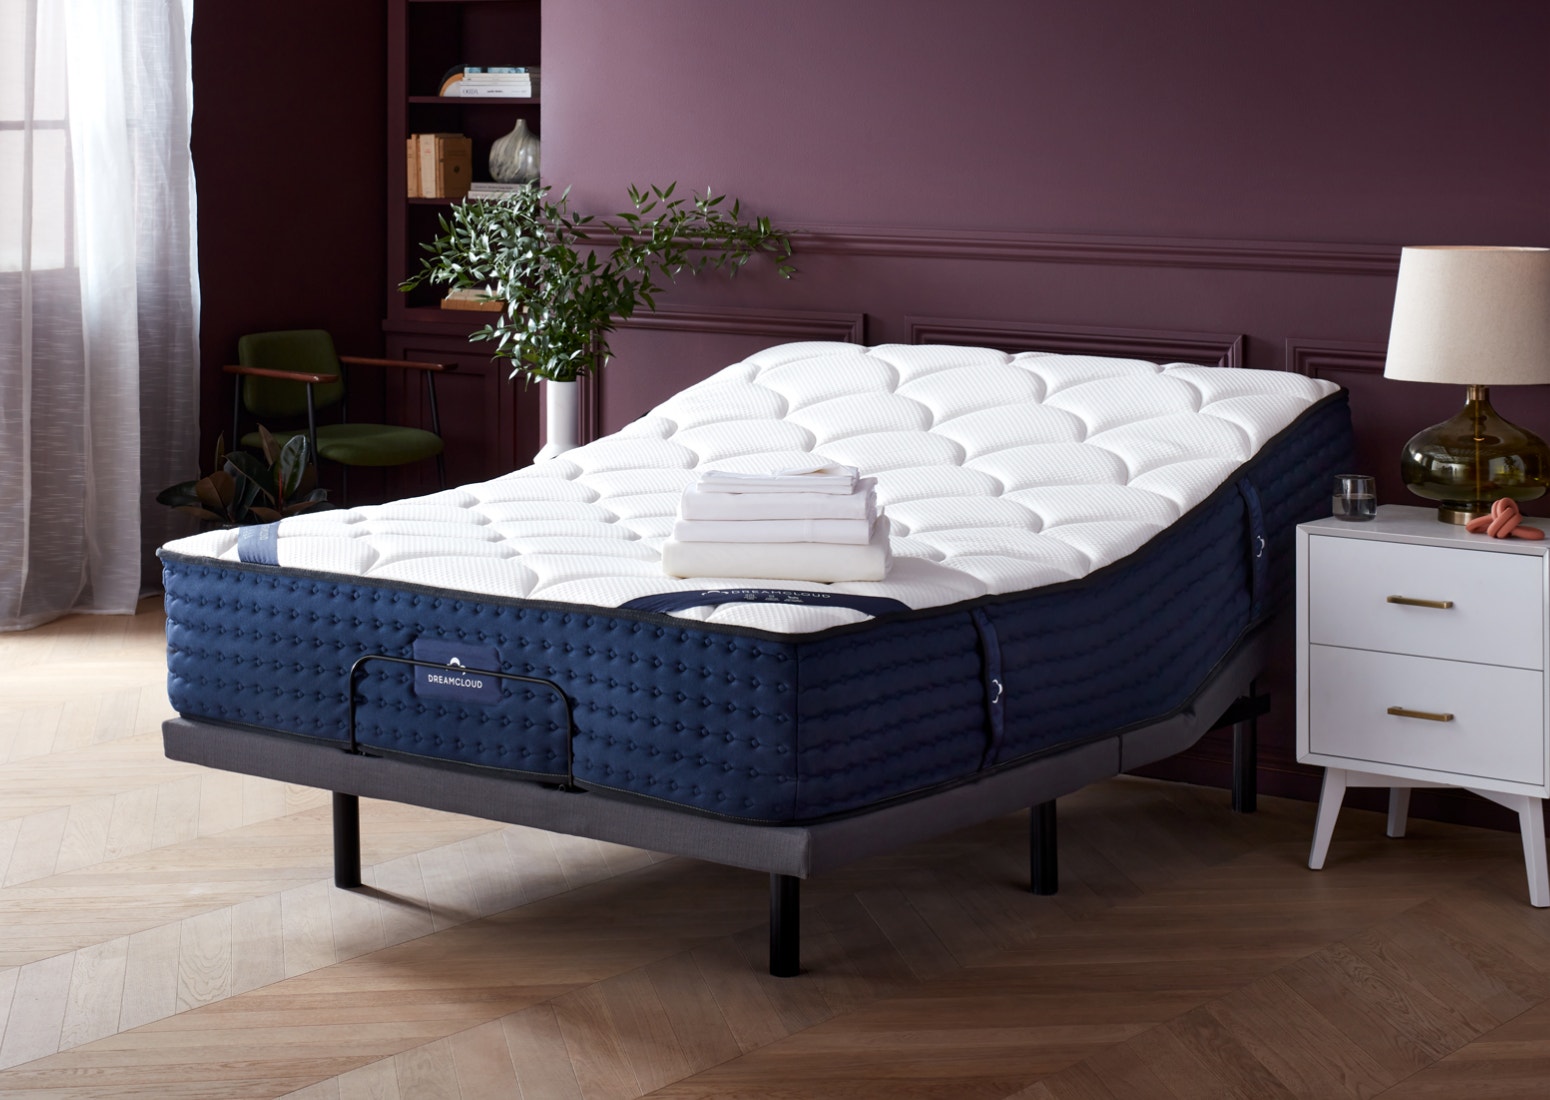 Split King Size Adjustable Bed Frames, How To Adjust Bed Frame From Queen Full